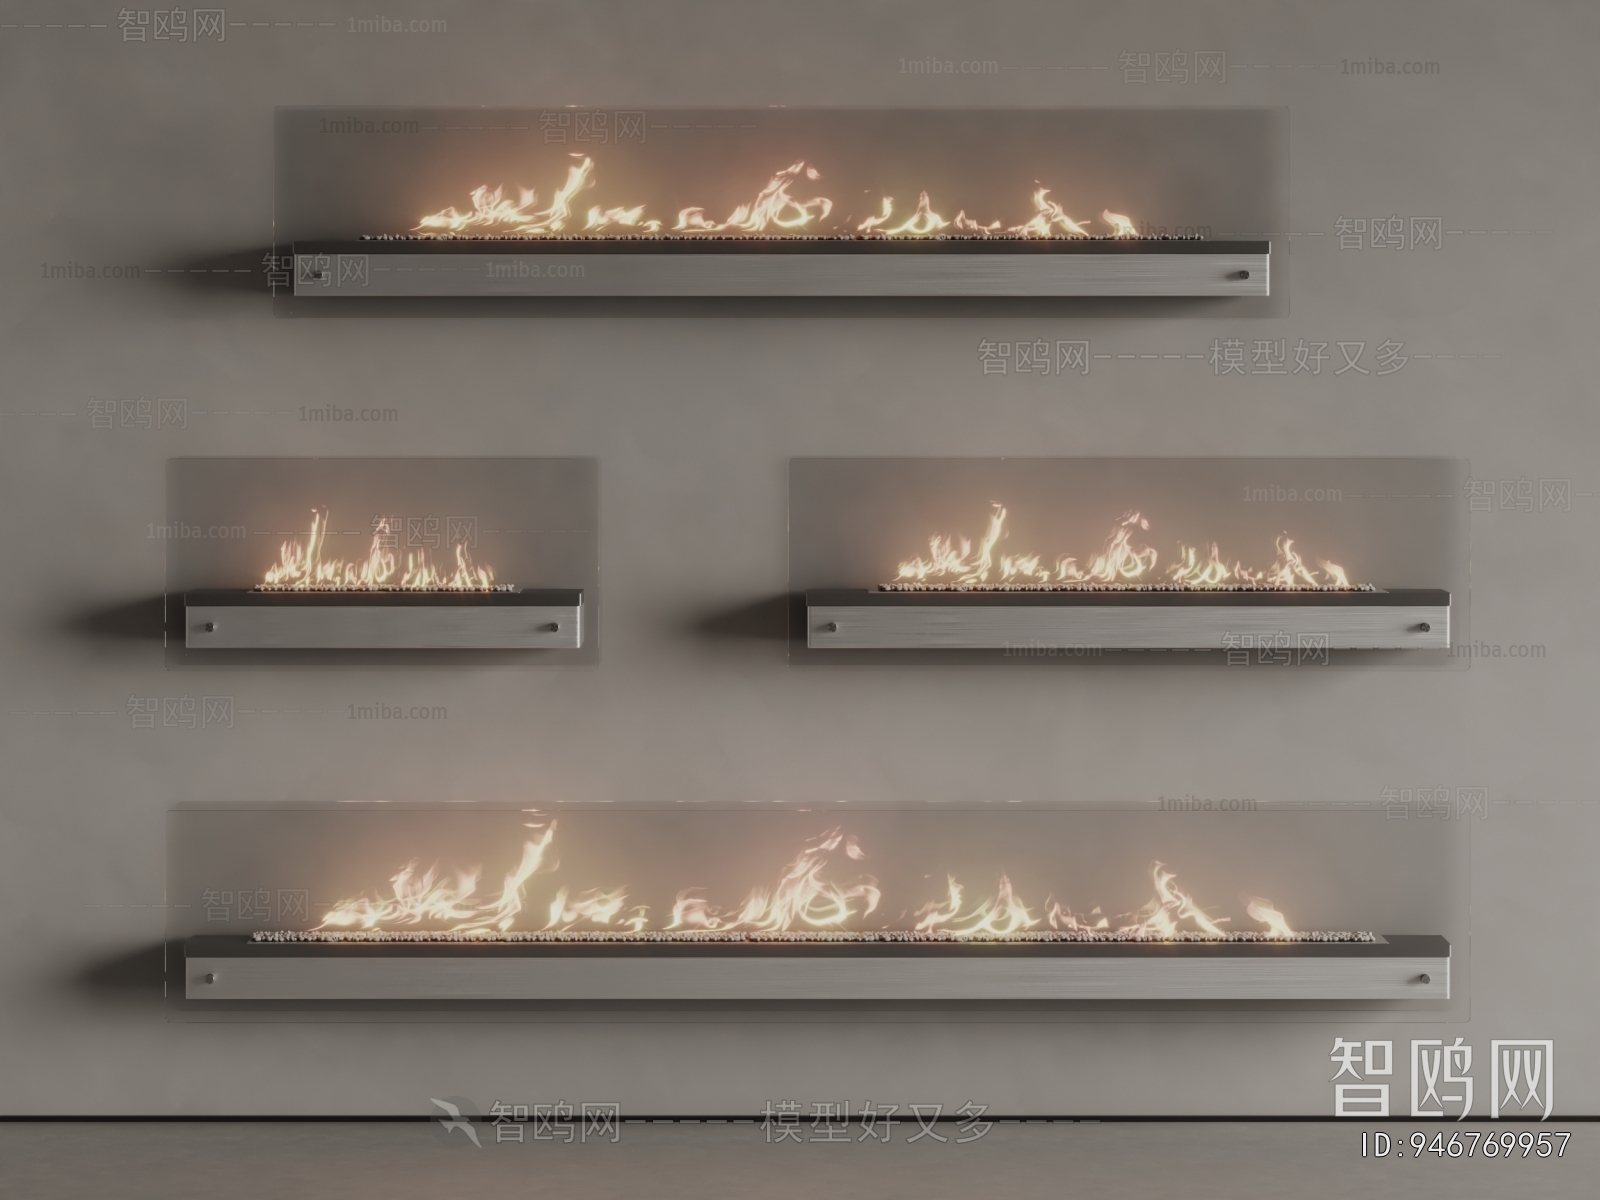 kvadro现代壁炉 火炉3D模型下载